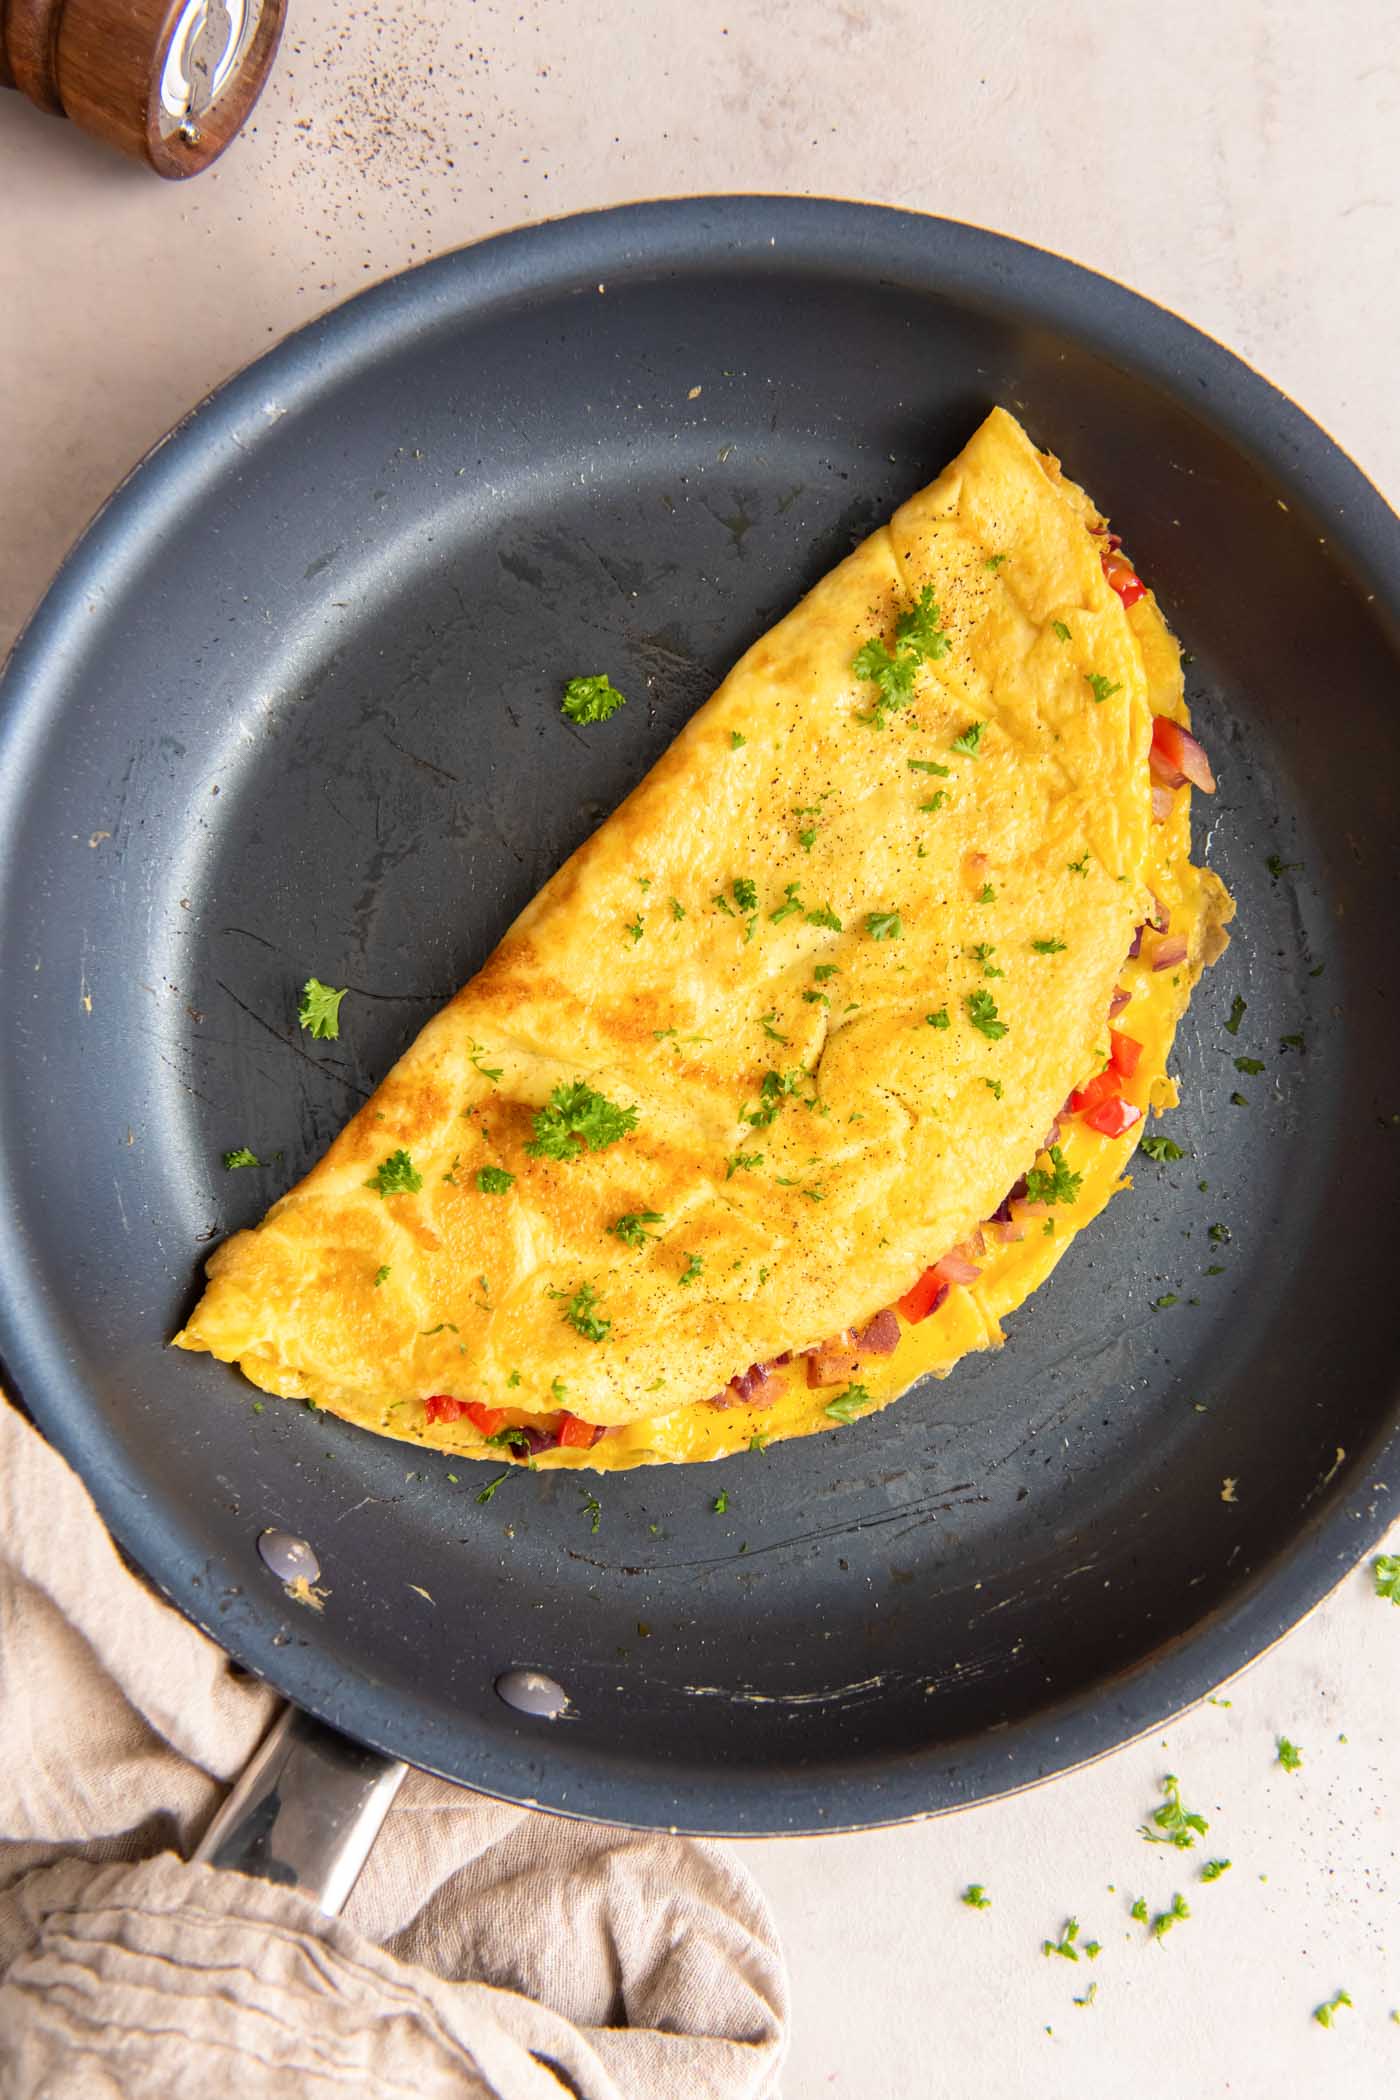 https://kristineskitchenblog.com/wp-content/uploads/2023/02/how-to-make-an-omelet-17-2.jpg